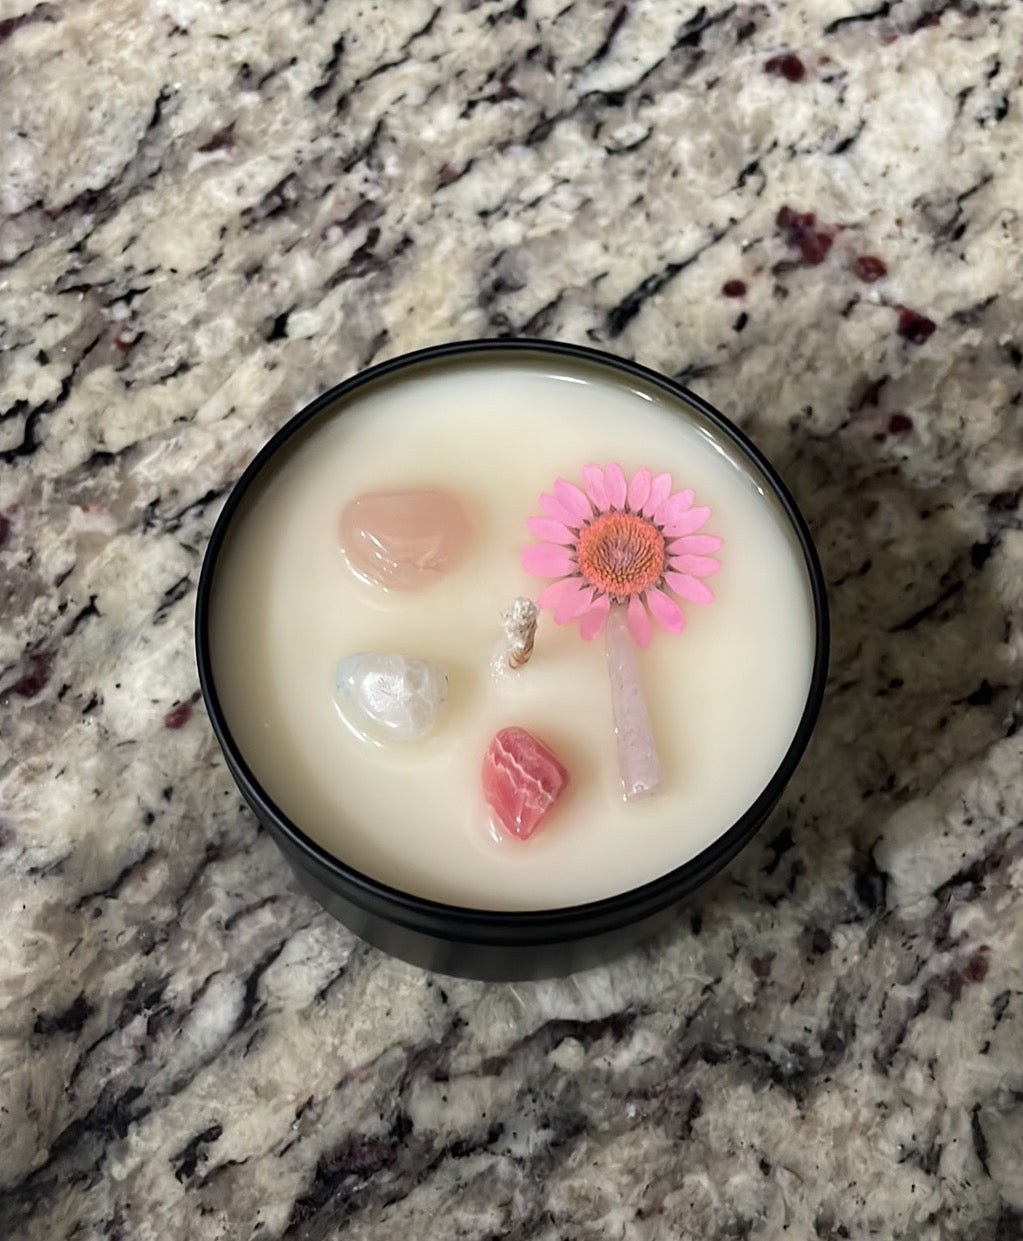 Handmade Reiki Infused Love Letter Fragrance - Self-love Candle